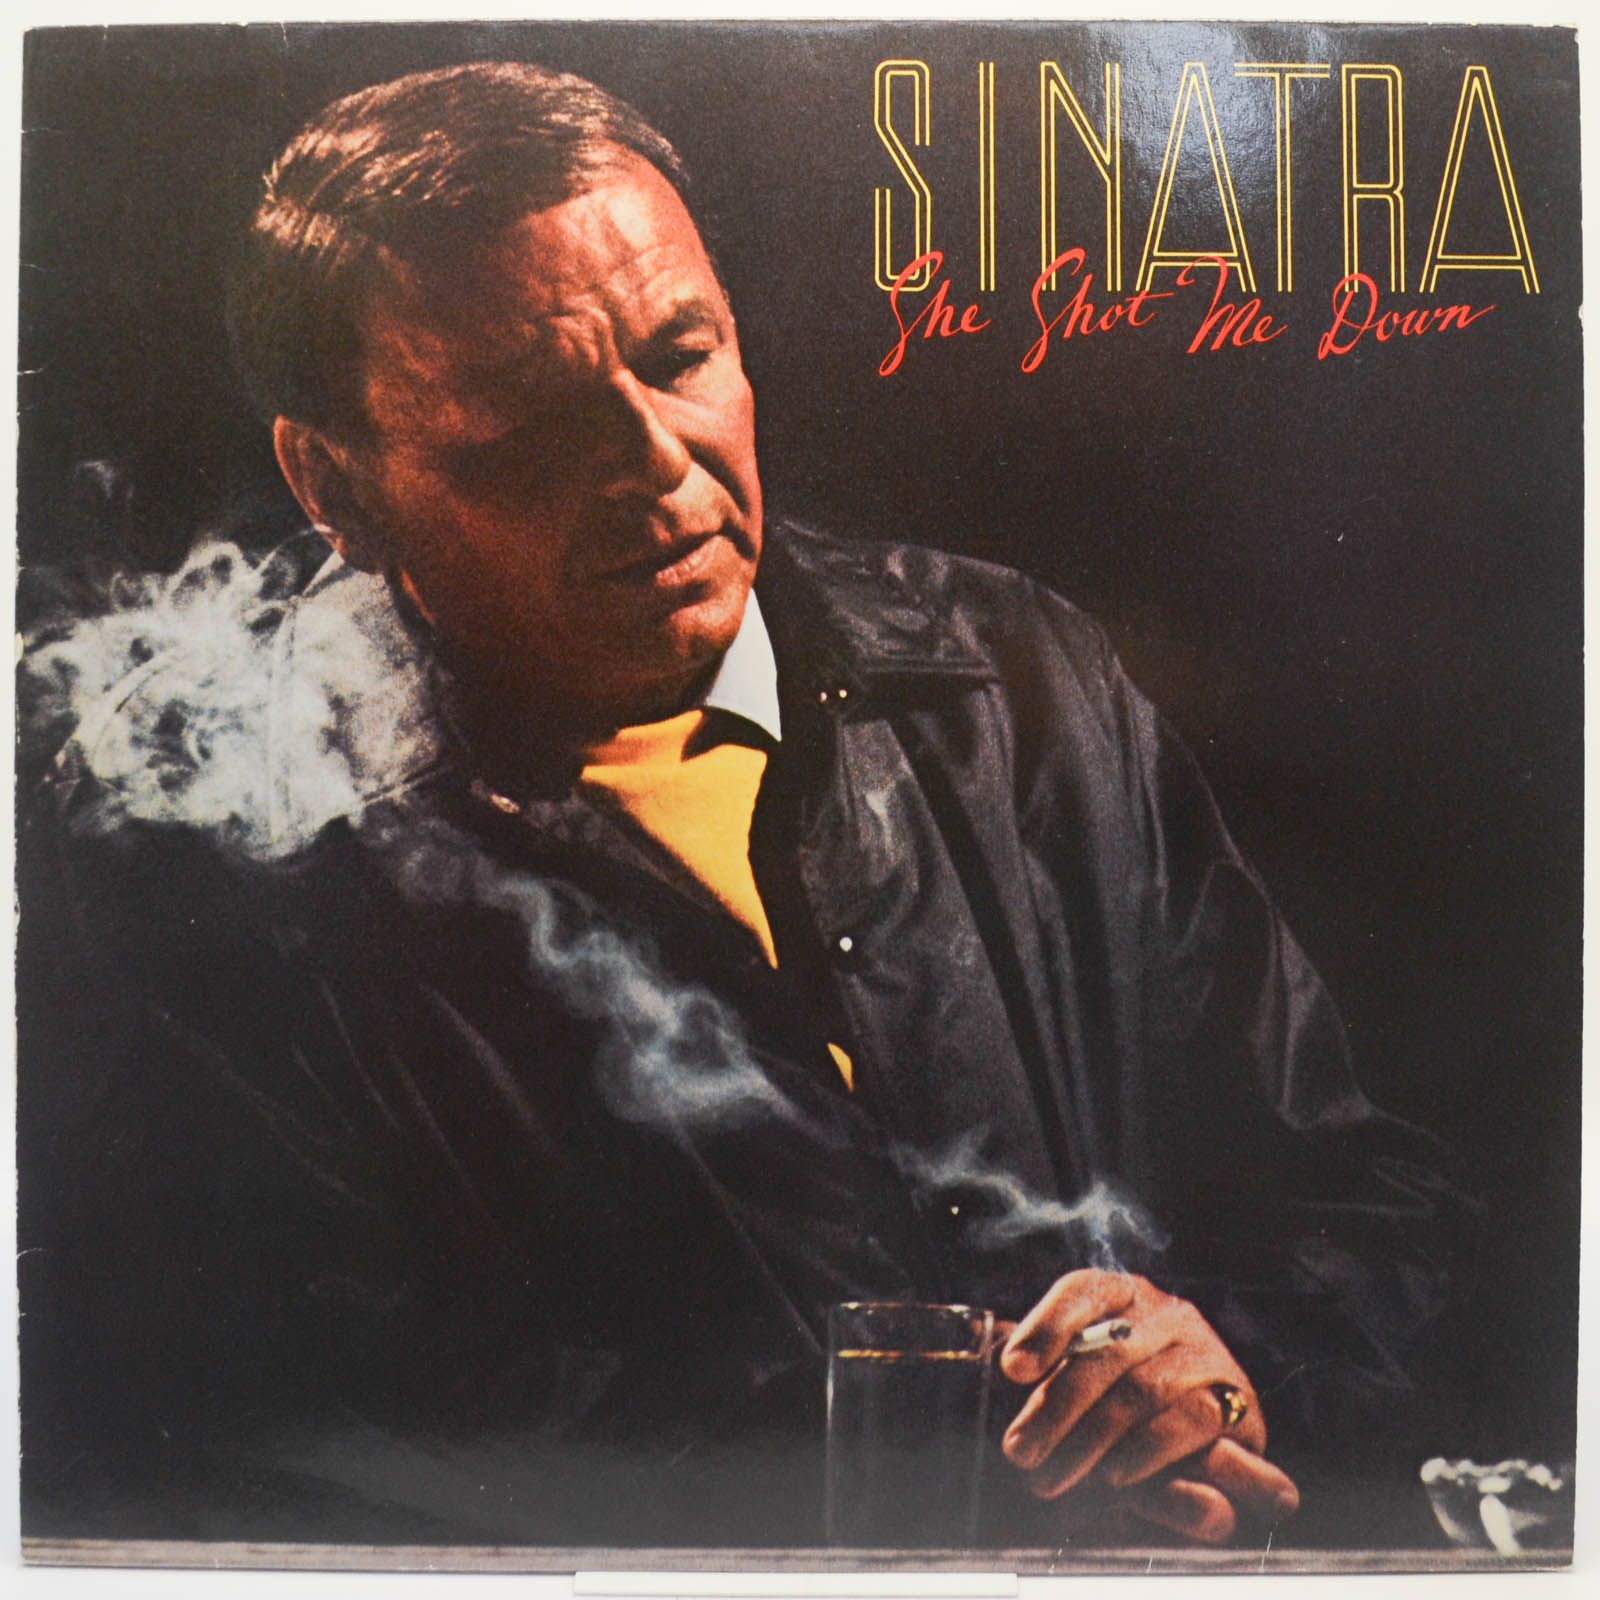 Frank Sinatra — She Shot Me Down, 1981